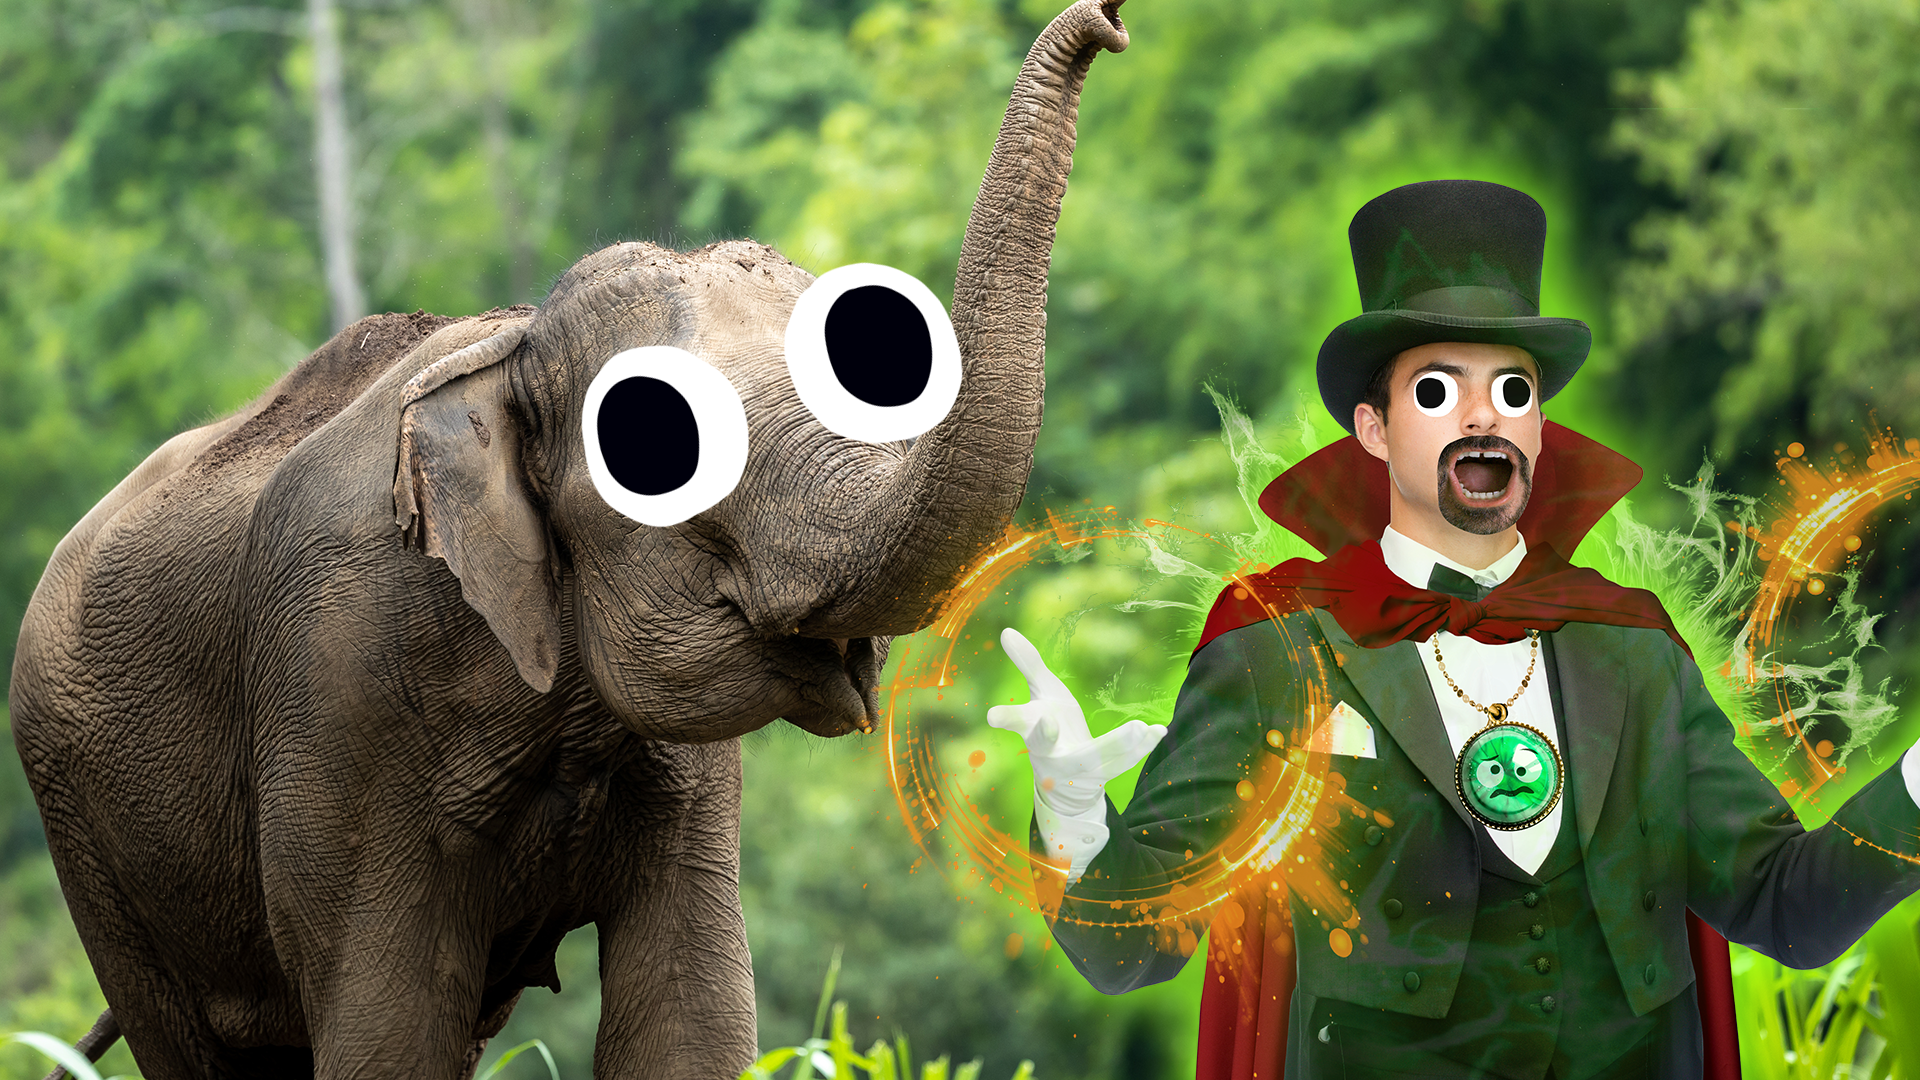 An elephant and a magician